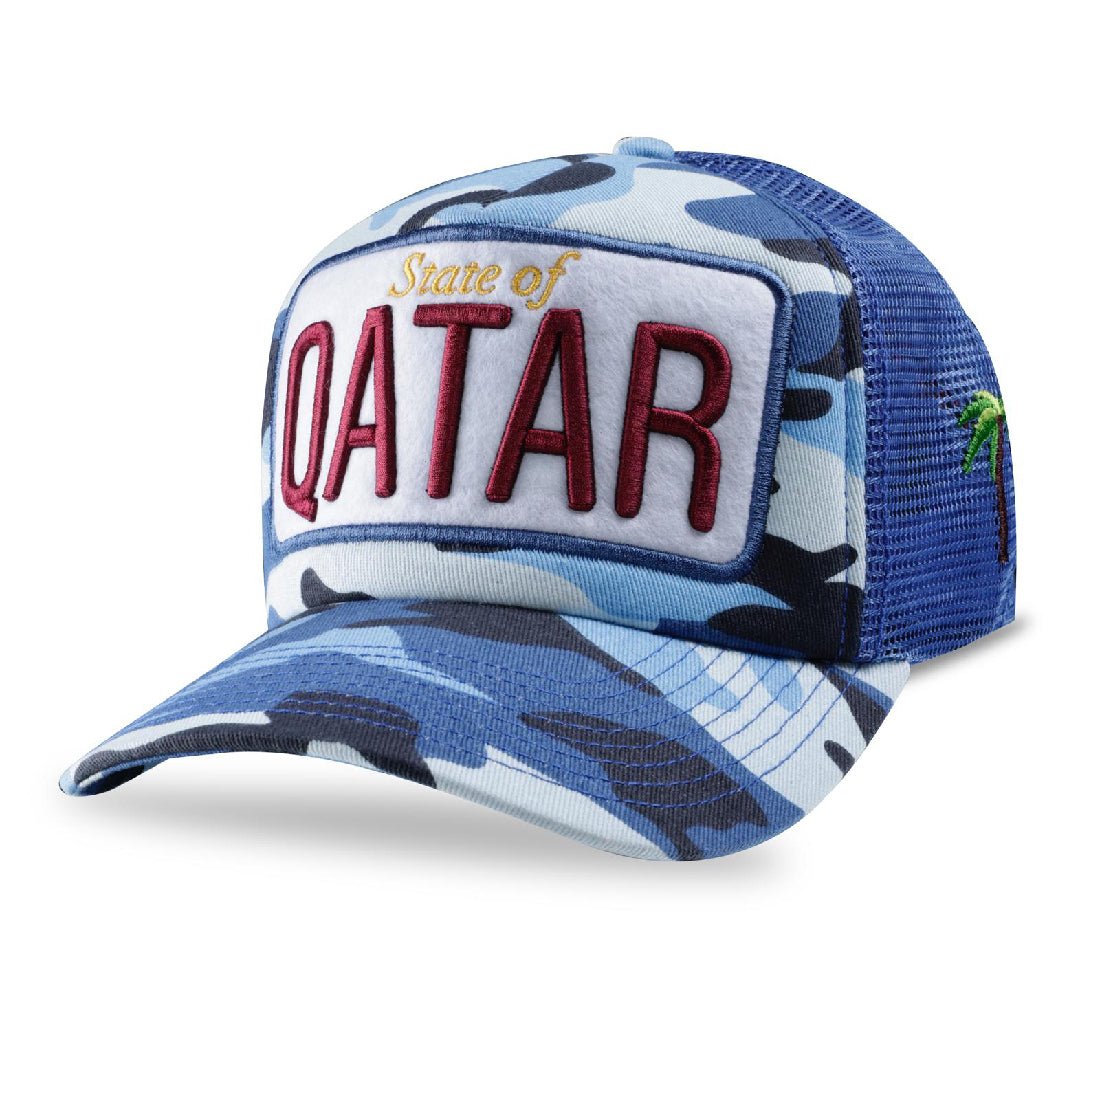 Tribe Qatar Camo Adults Cap - Blue - قبعة - Store 974 | ستور ٩٧٤